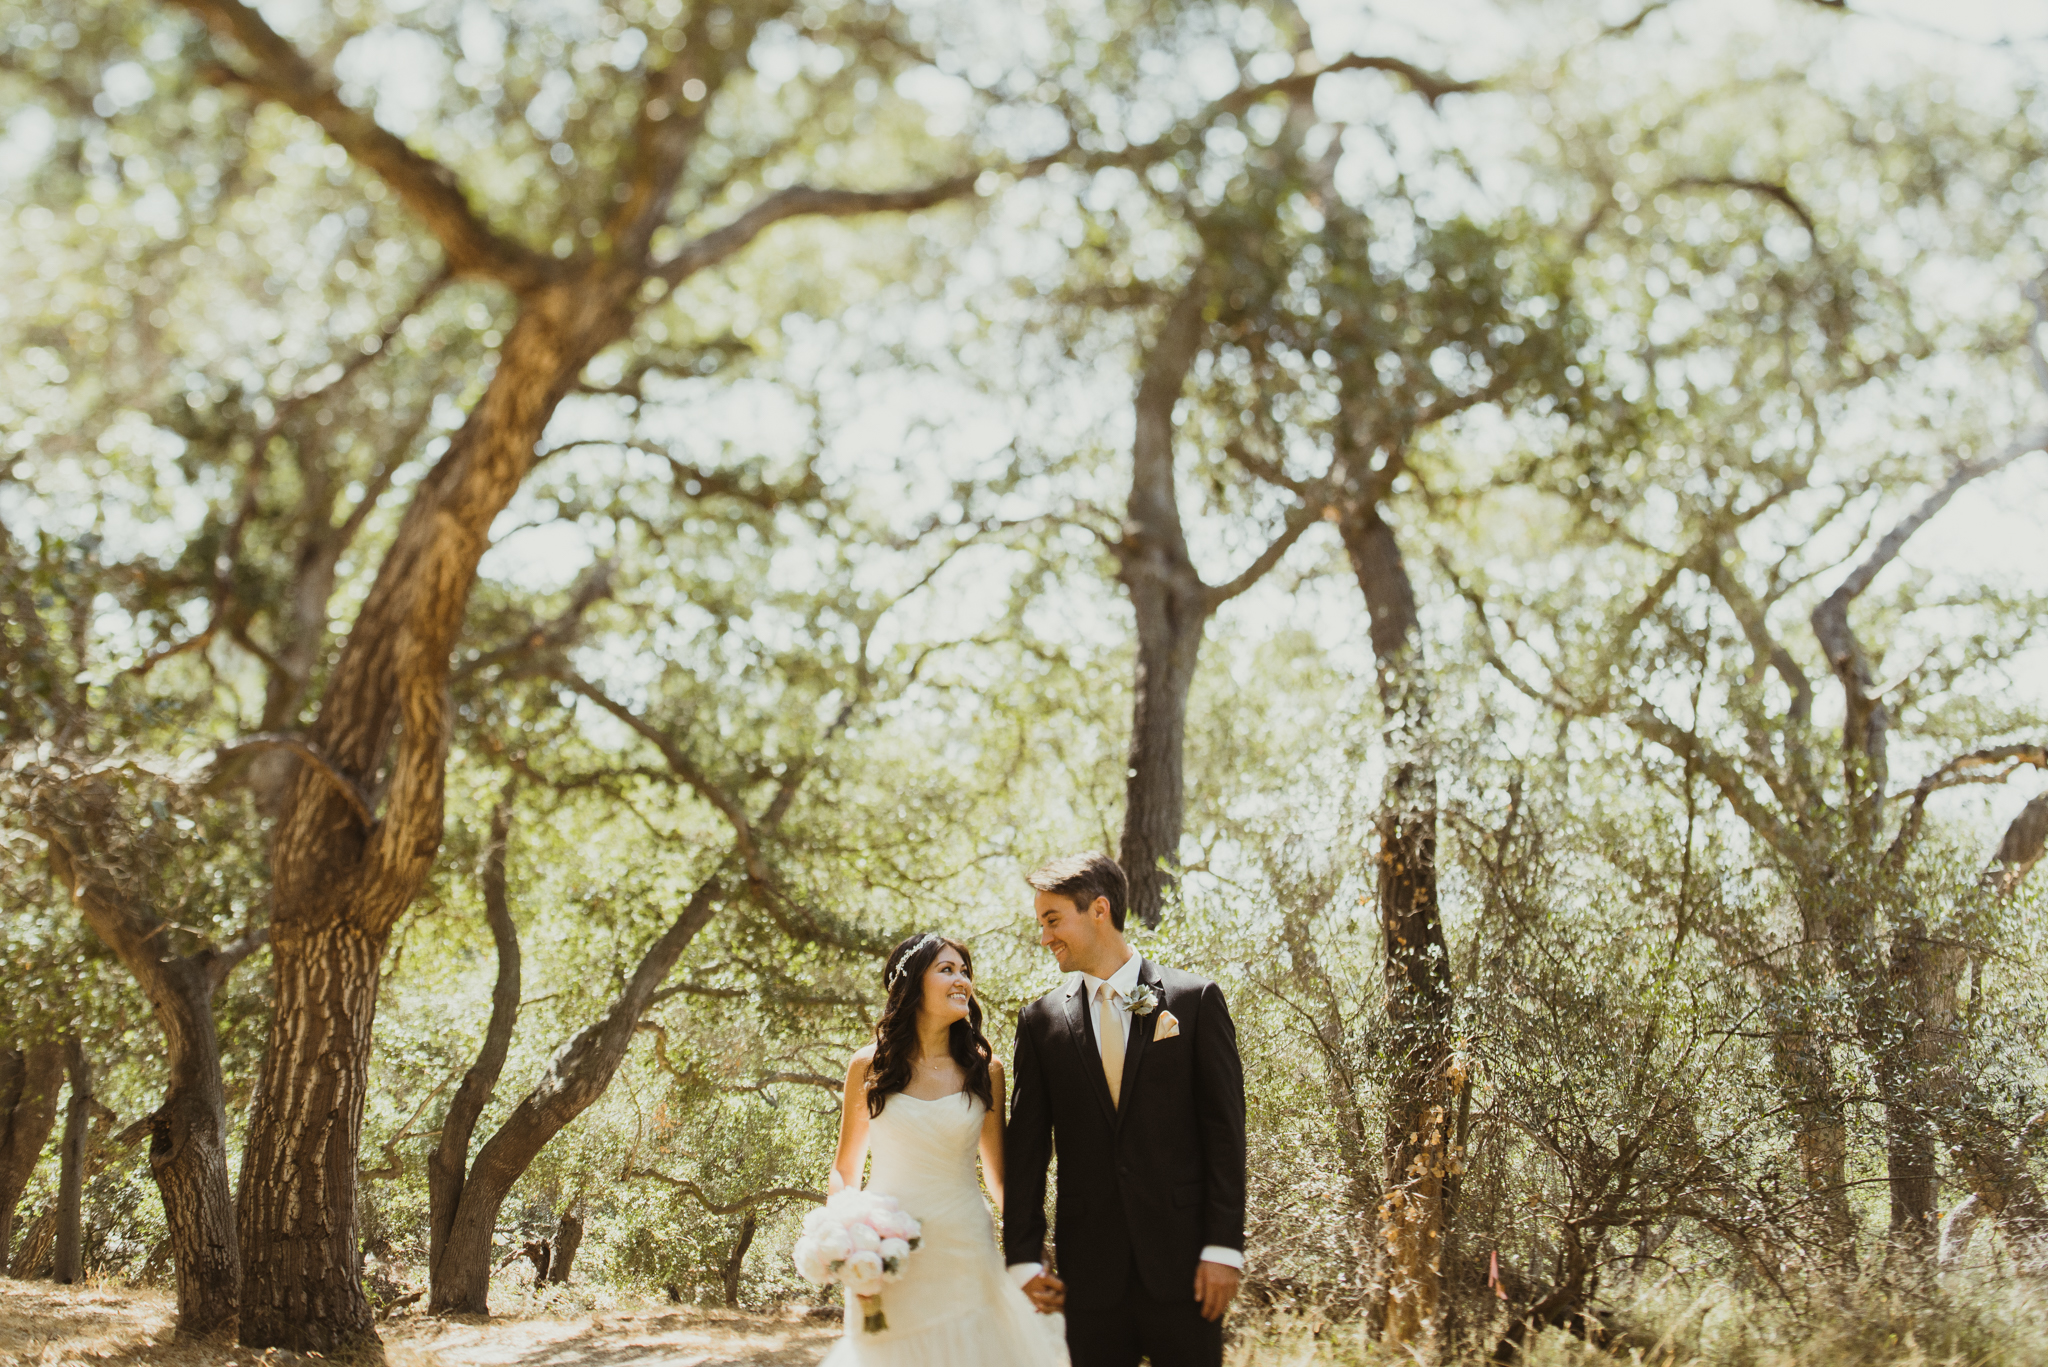 ©Isaiah & Taylor Photography - Inn of the Seventh Ray Wedding, Topanga Canyon California-38.jpg